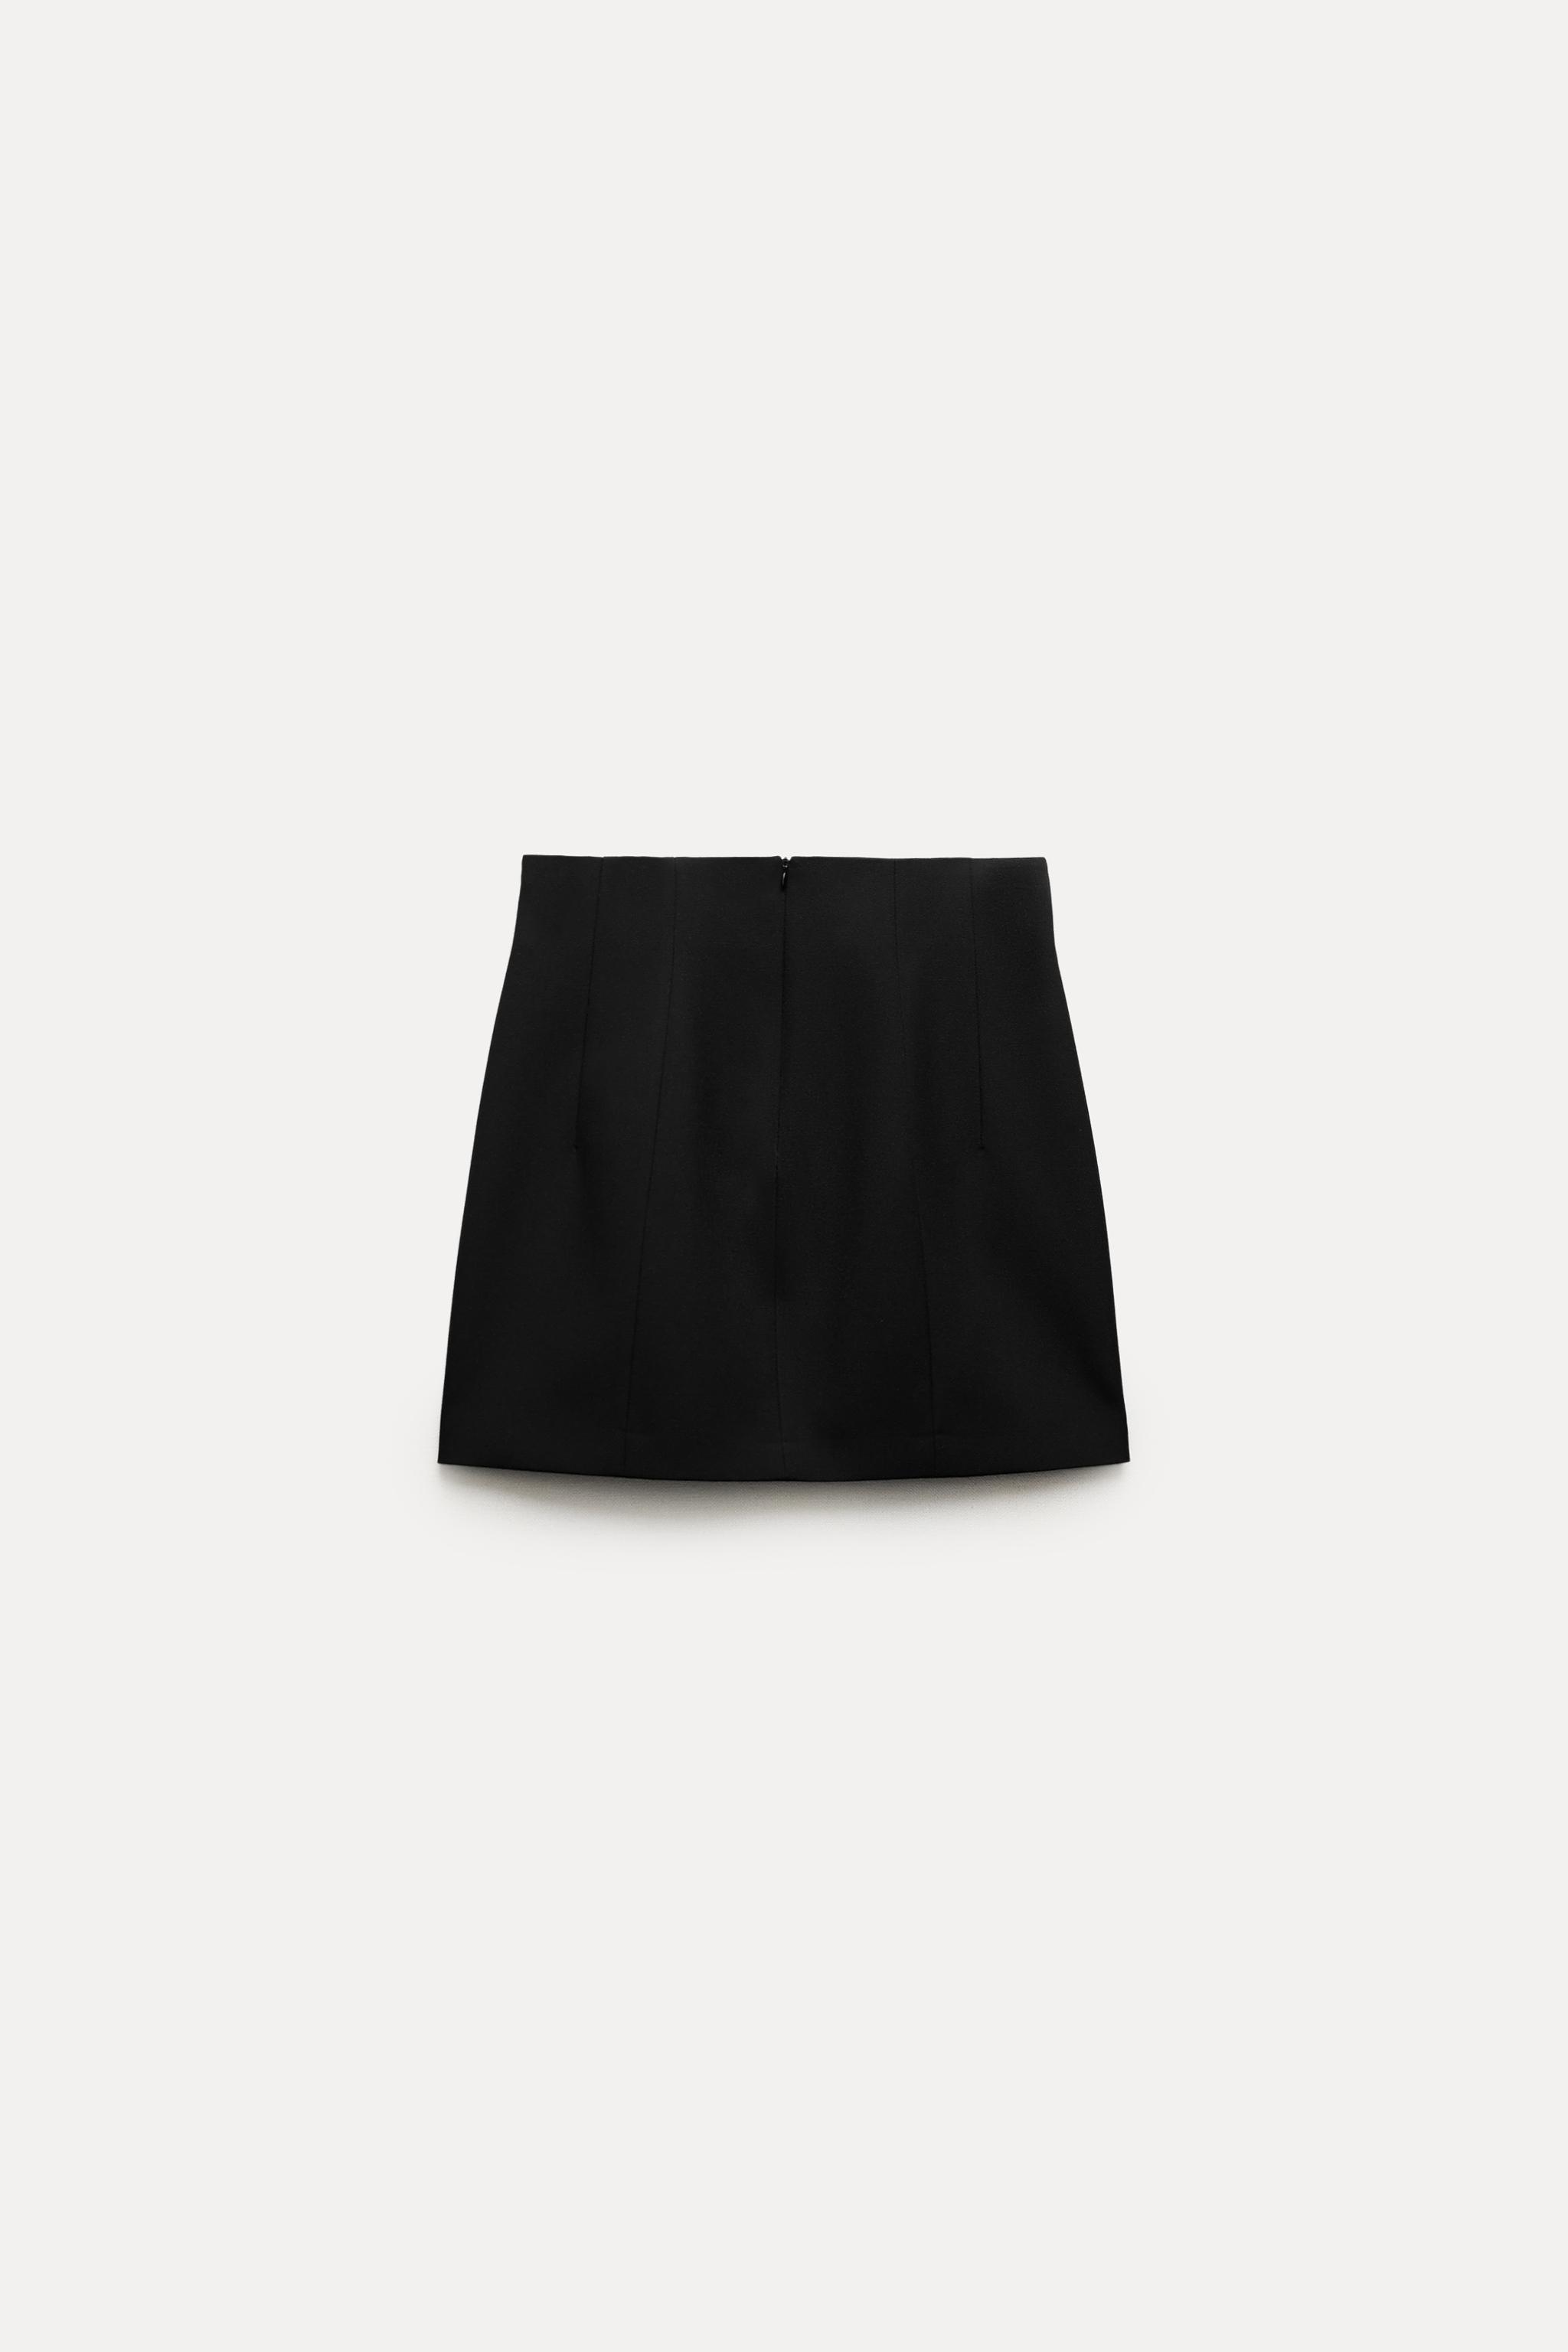 60's mod vibes - Zara Printed mini skirt, h& black knit mustard